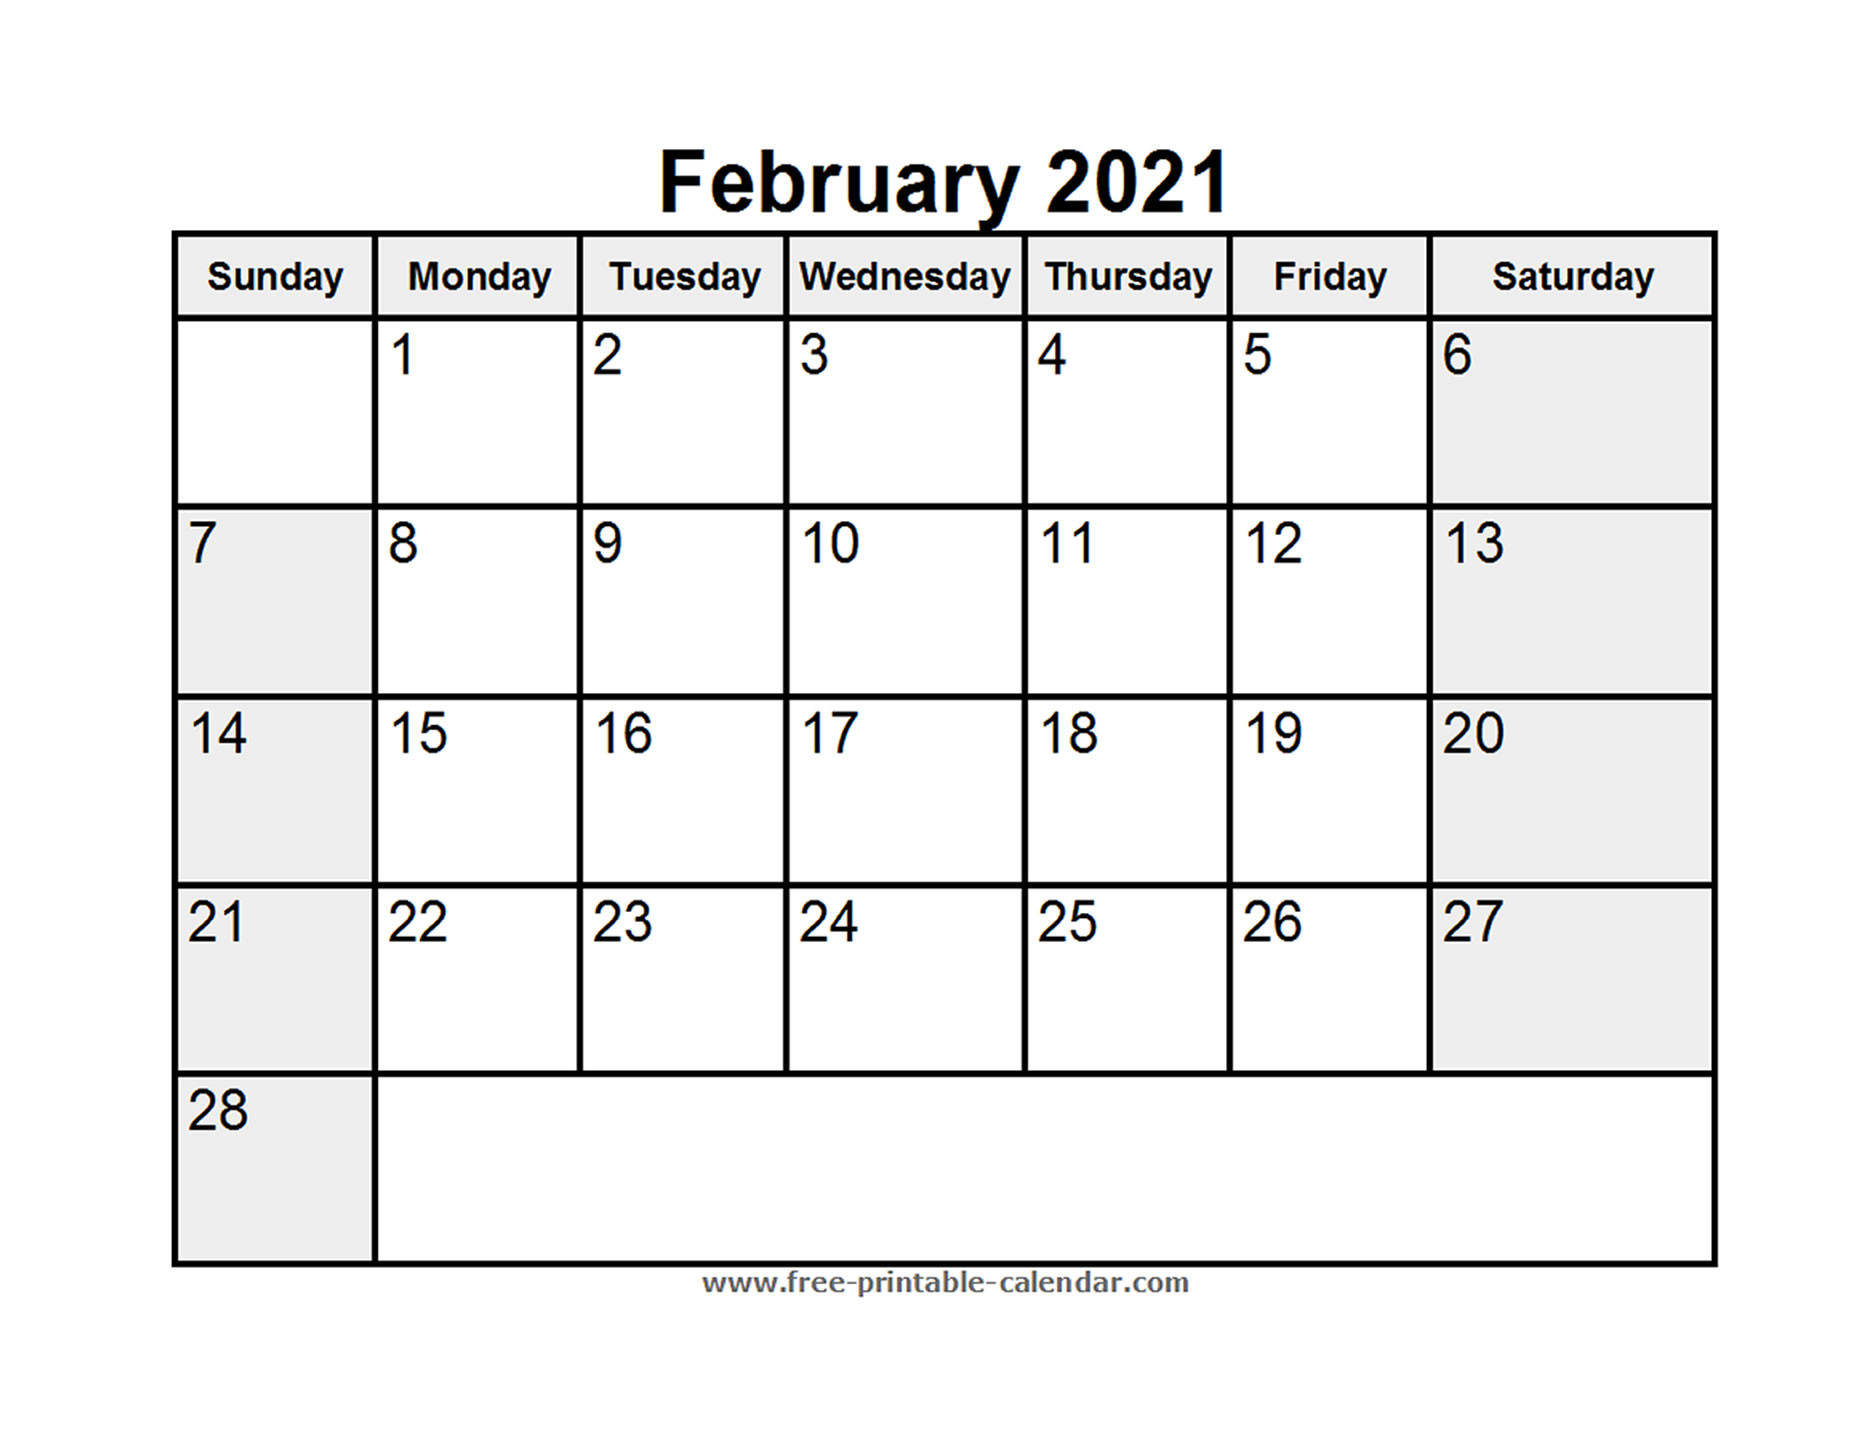 February 2021 Calendar Printable Free - Free Printable-February Calendar 2021